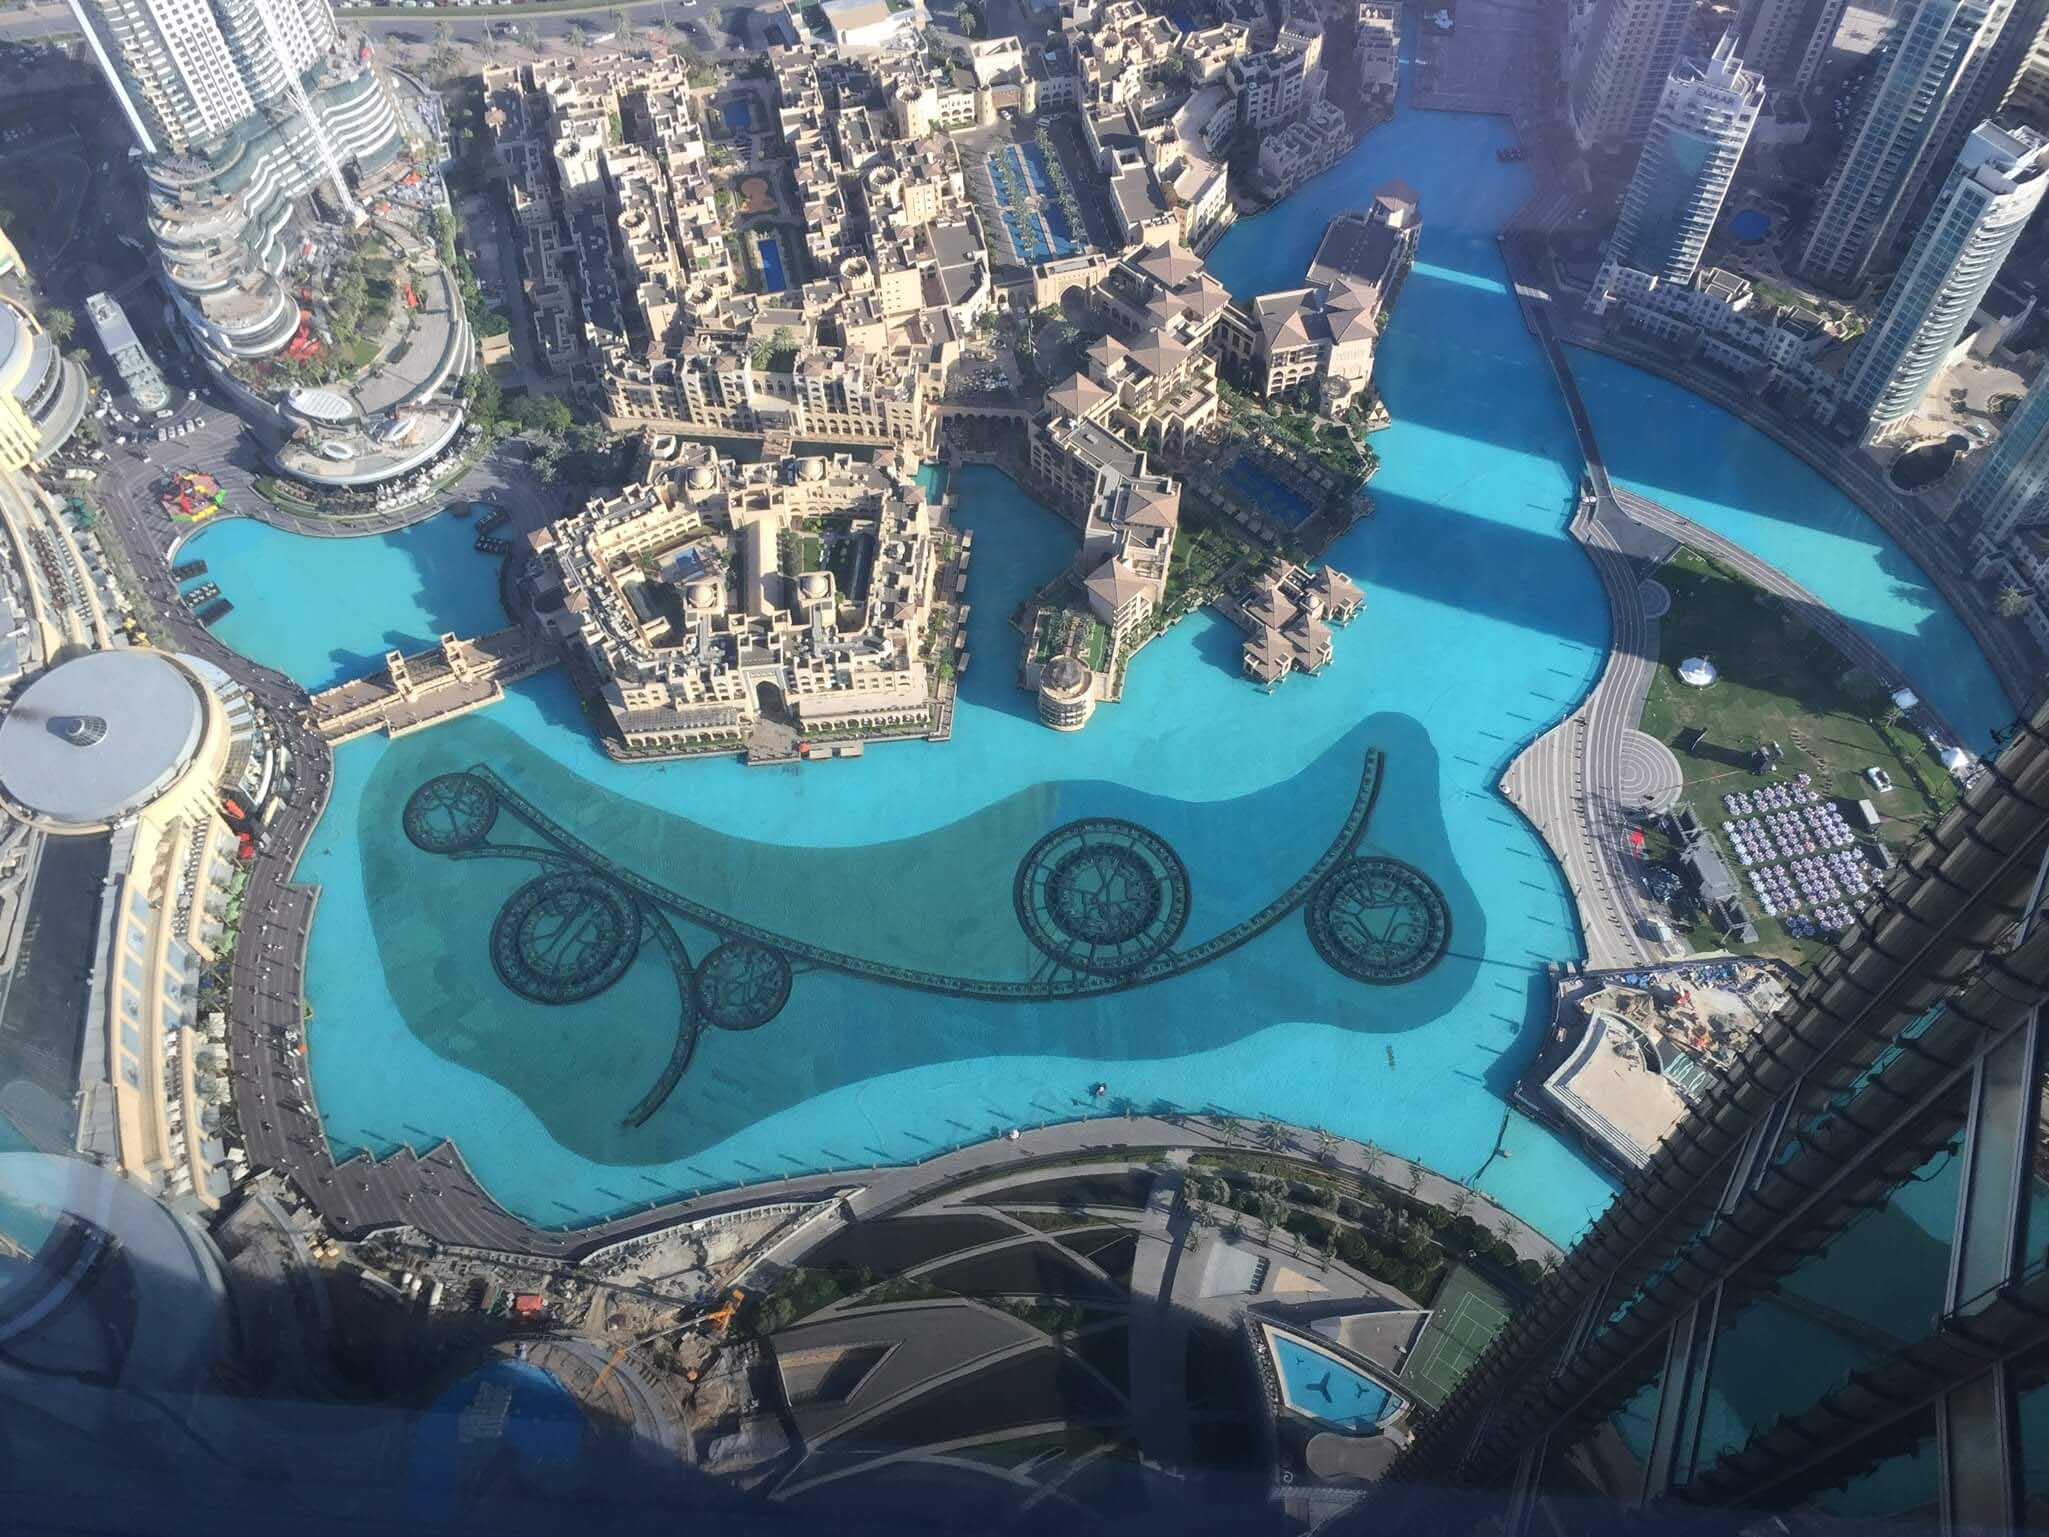 aerial view looking downward on buildings and water in Dubai 